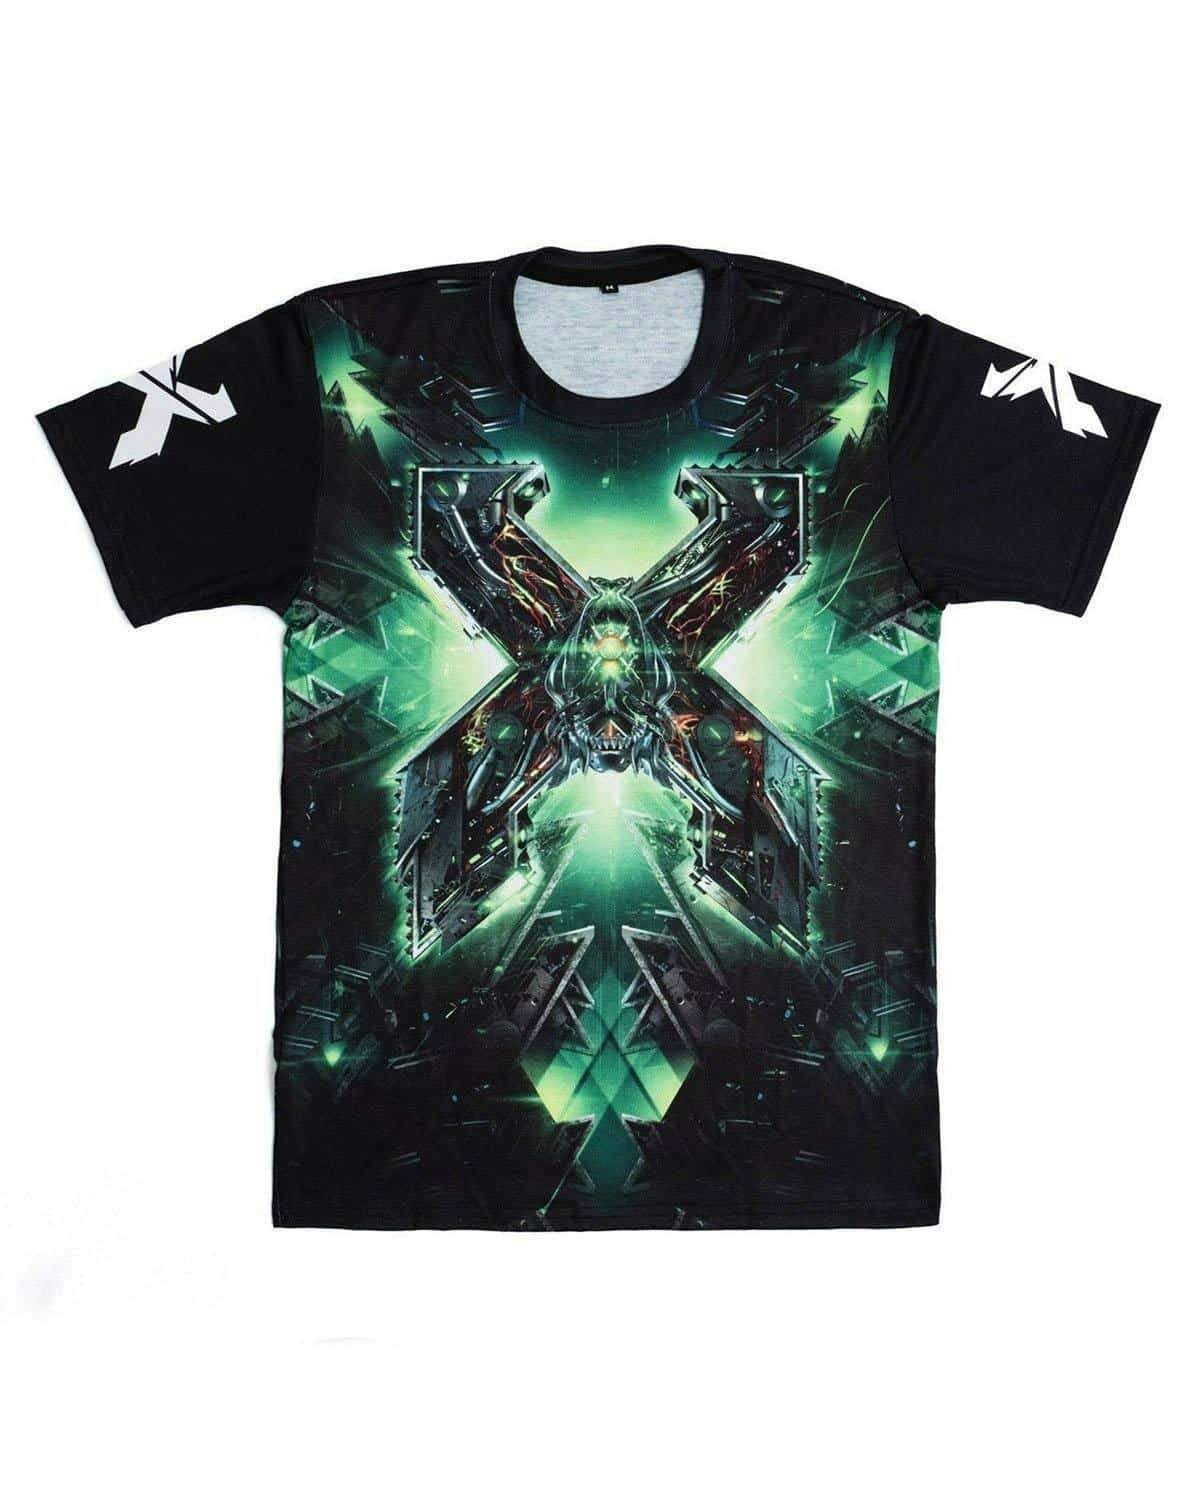 Excision 'The Paradox 2018' Dye Sub Tour T-Shirt - Black/Green